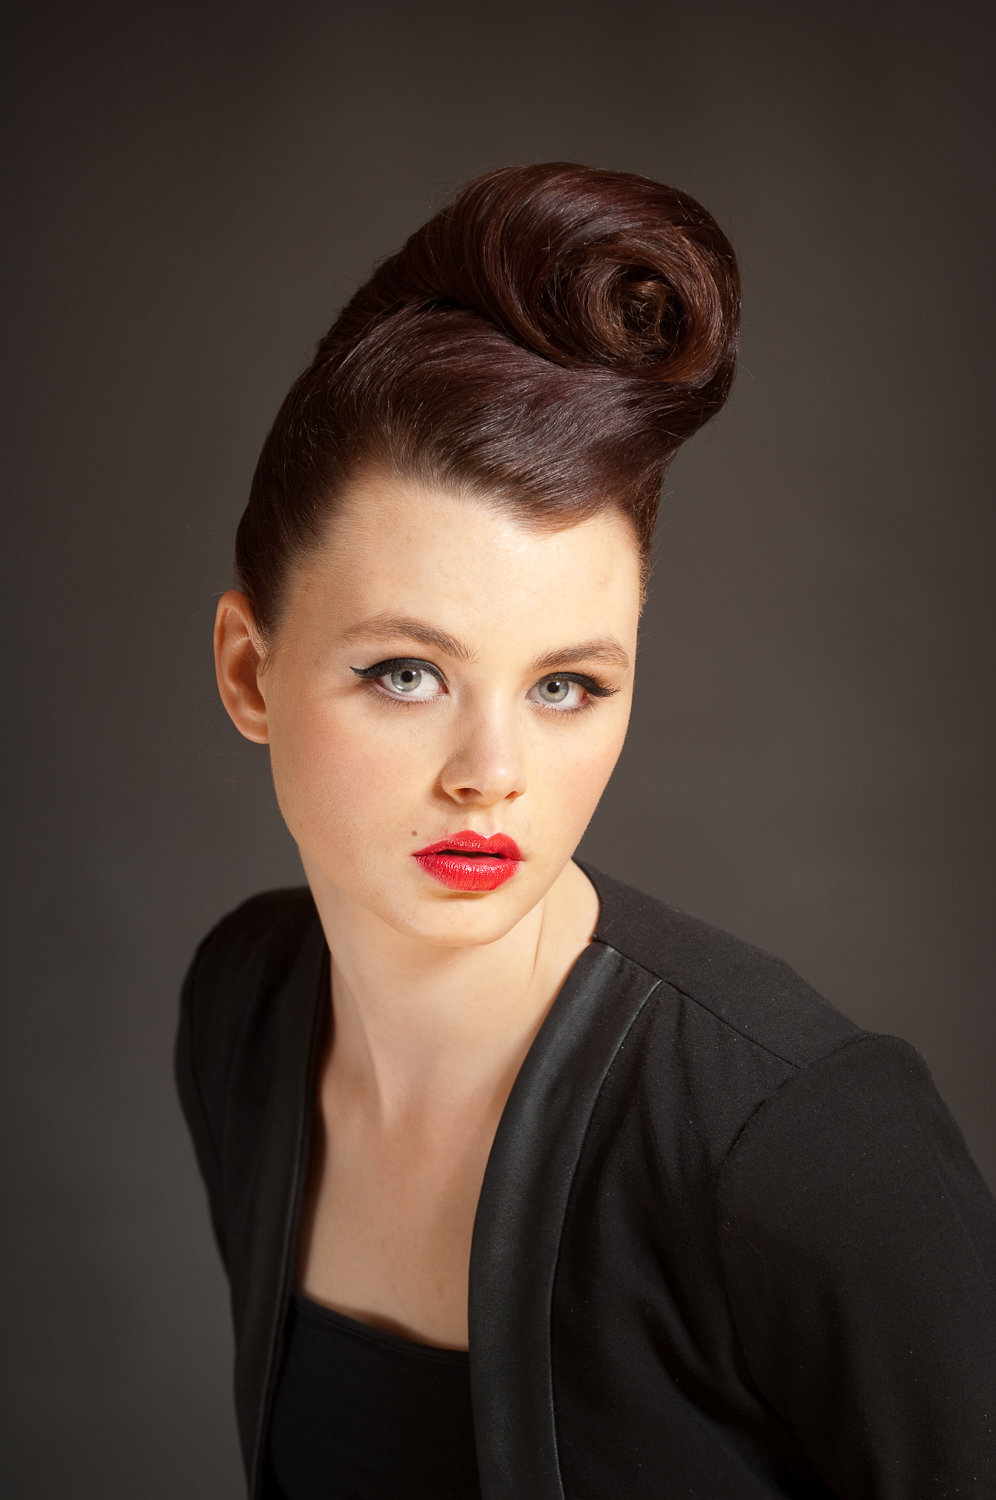 headshot of female model with vintage hairstyle, wearing black tuxedo jacket and red lipstick